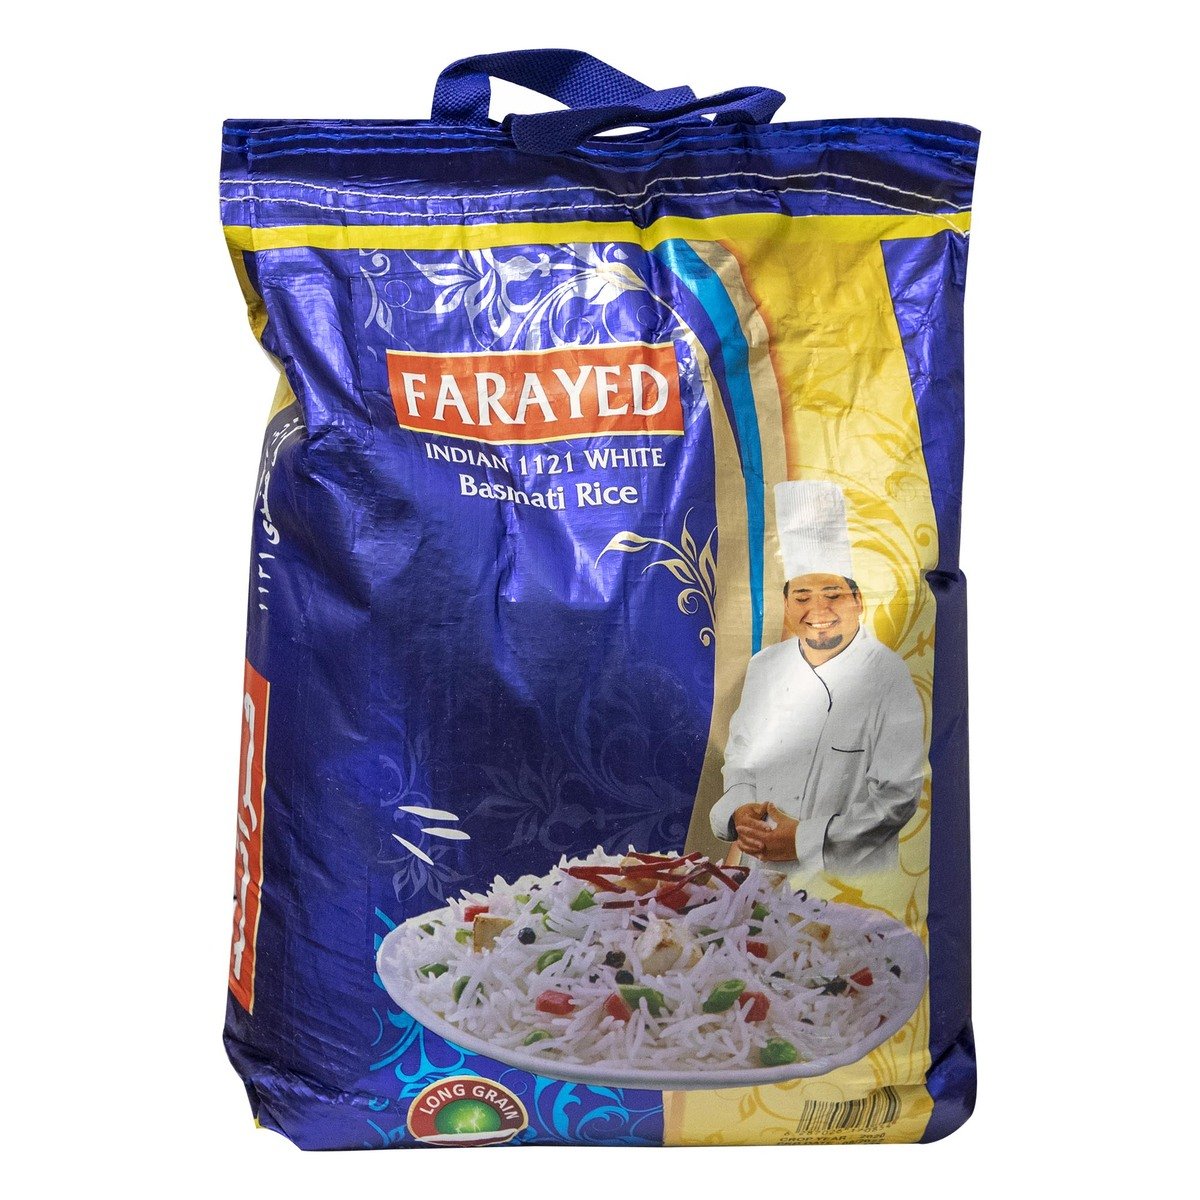 Farayed Indian 1121 White Basmati Rice 10 kg